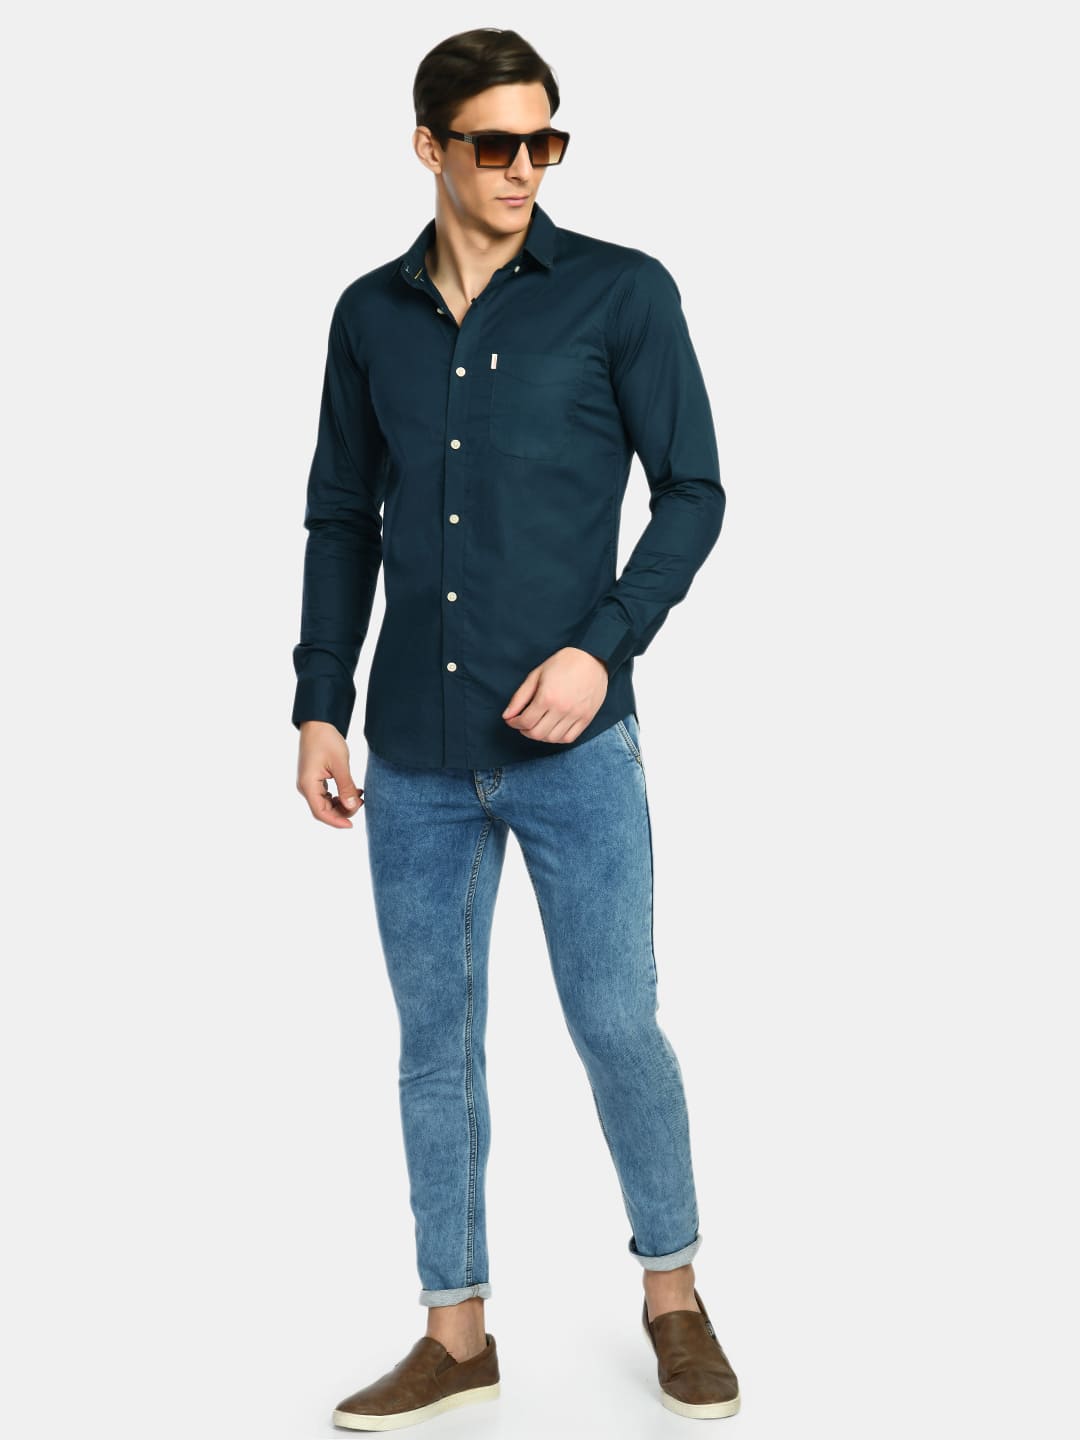 Men's Teal Blue Solid Regular Fit Casual Shirt